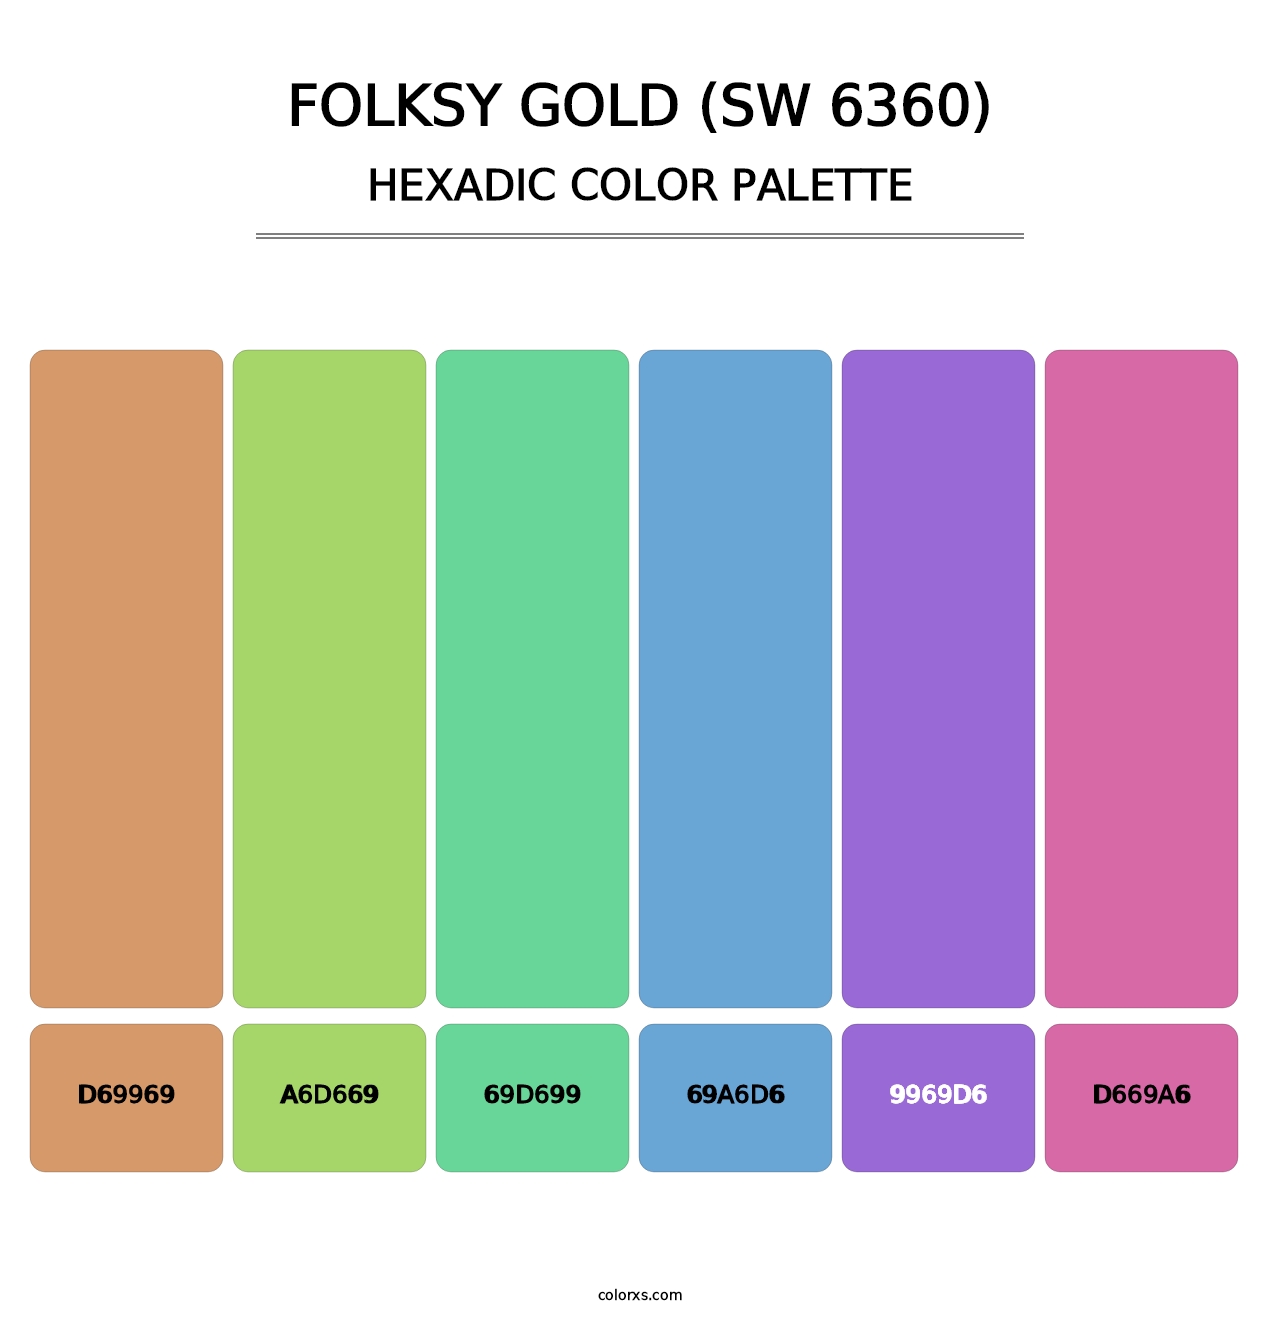 Folksy Gold (SW 6360) - Hexadic Color Palette